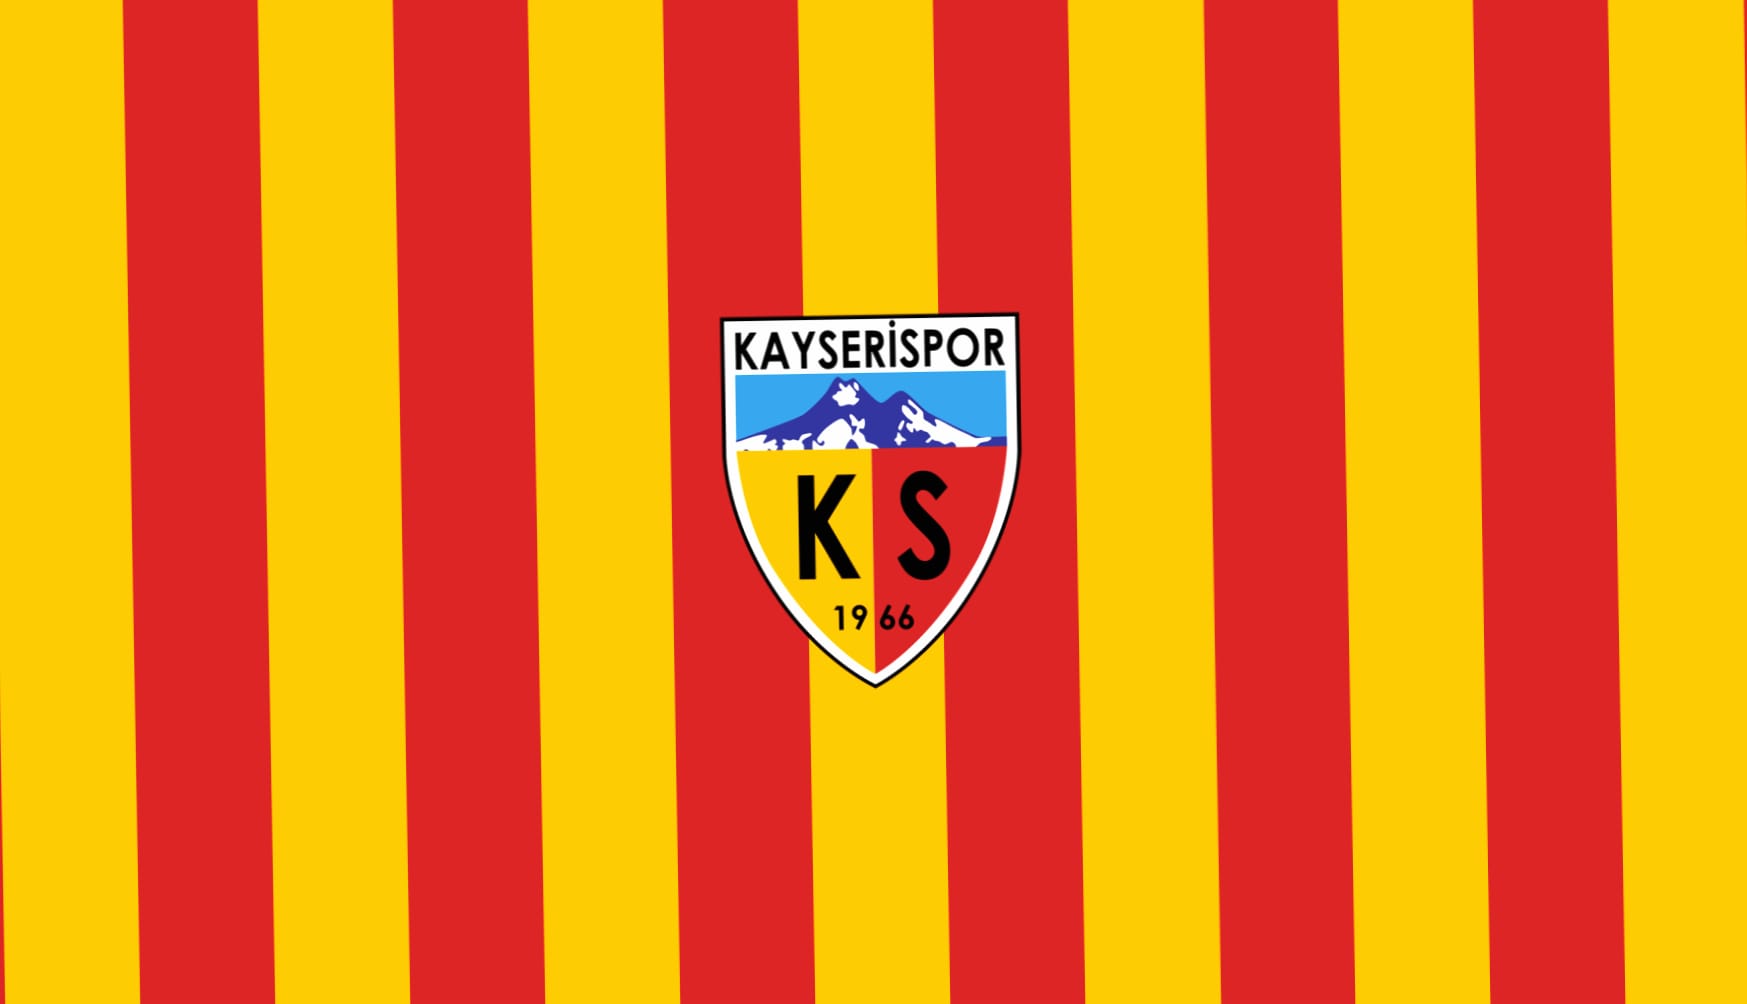 Kayserispor at 1600 x 1200 size wallpapers HD quality